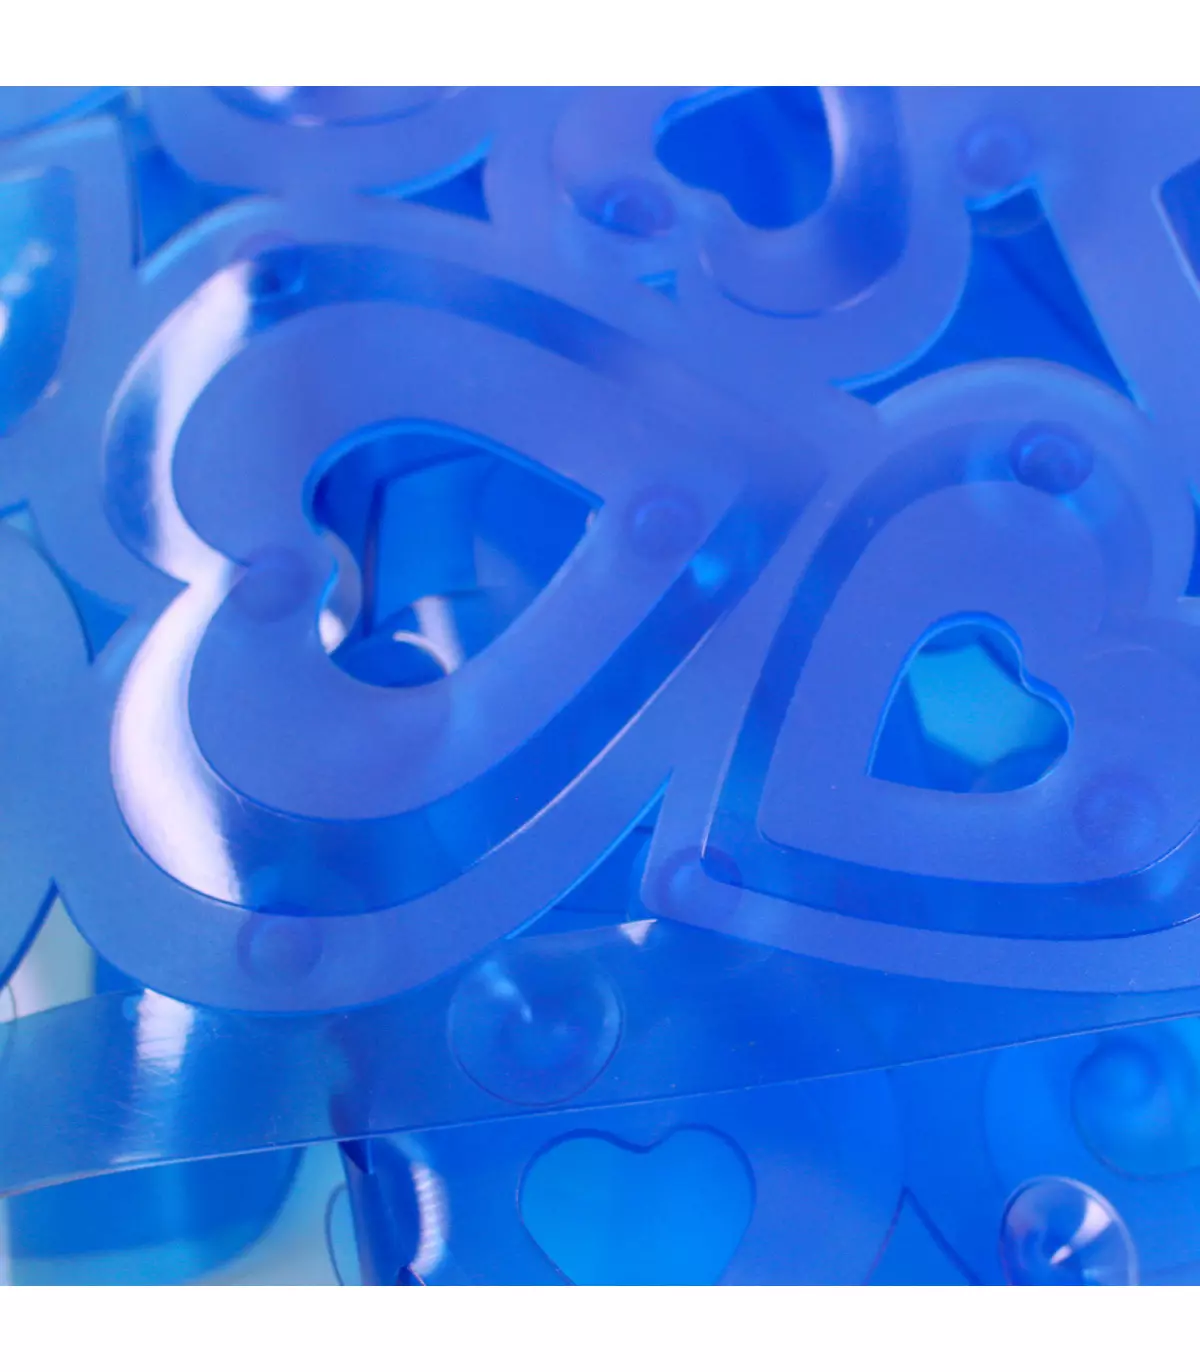 https://olivo.shop/7768-superlarge_default/ventosa-non-slip-and-mold-proof-rubber-bath-mat-with-heart-design-blue-36x72-cm.webp